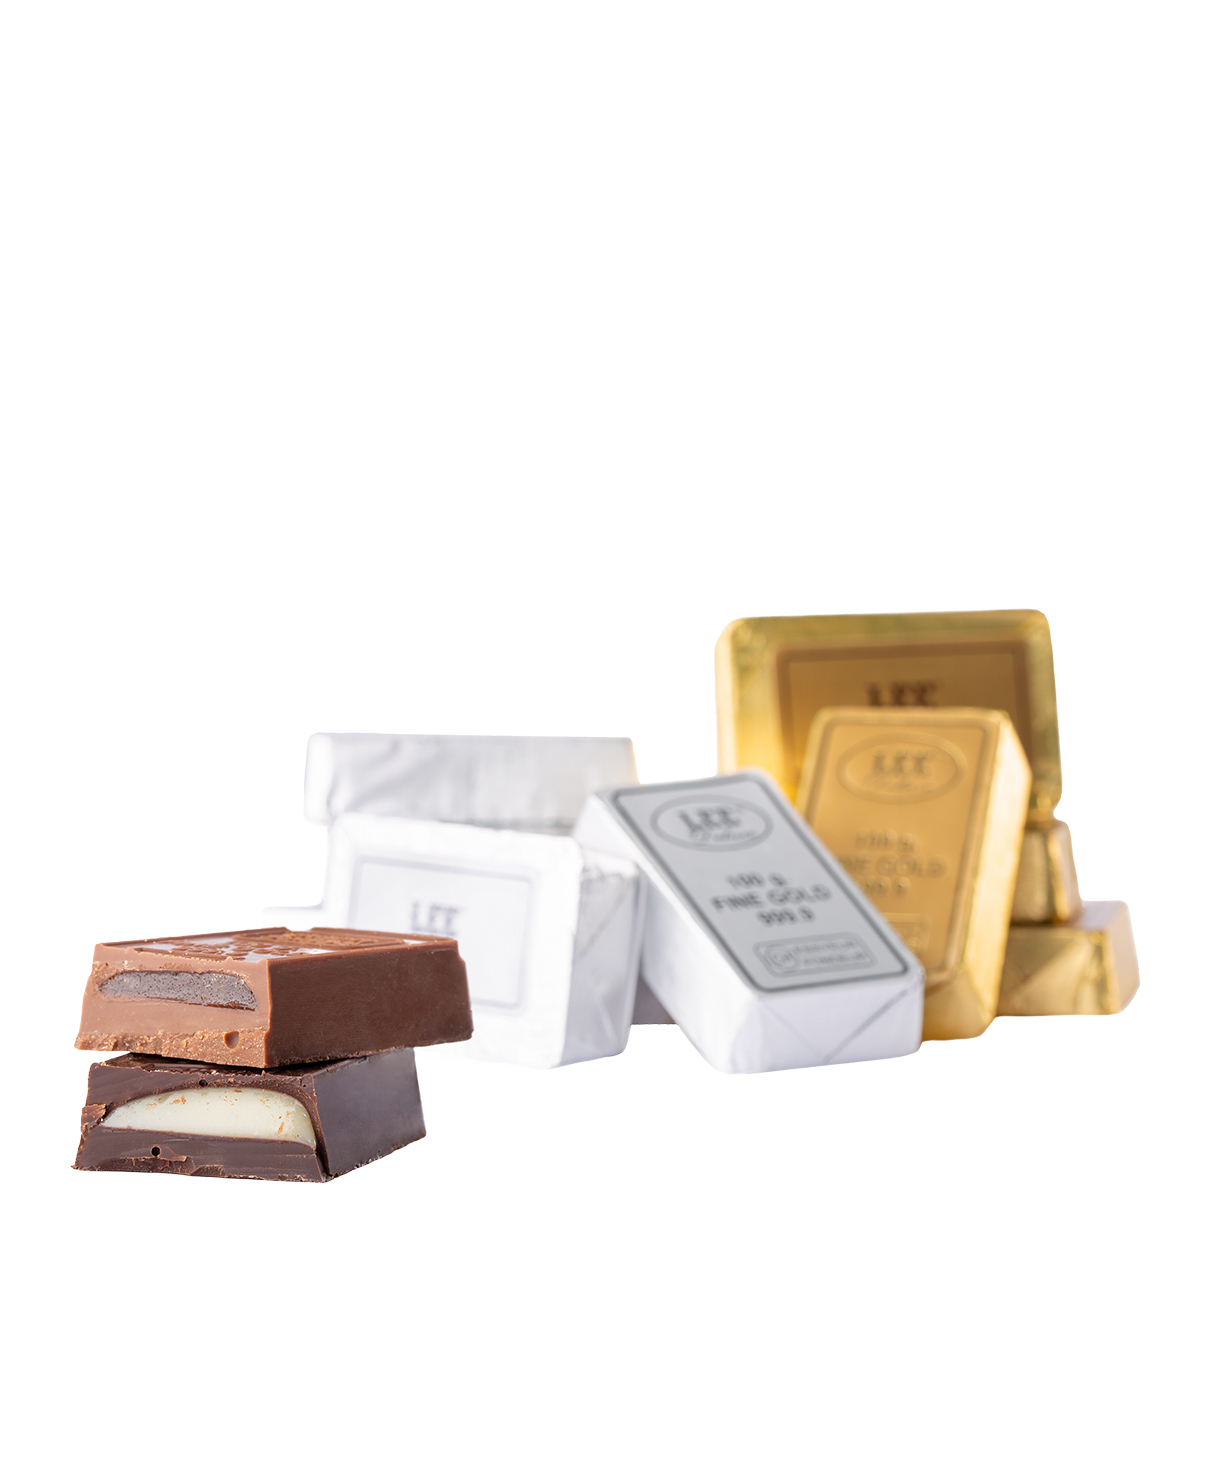 Коллекция `Lee Ounce Silver` шоколадных конфет 275 гр